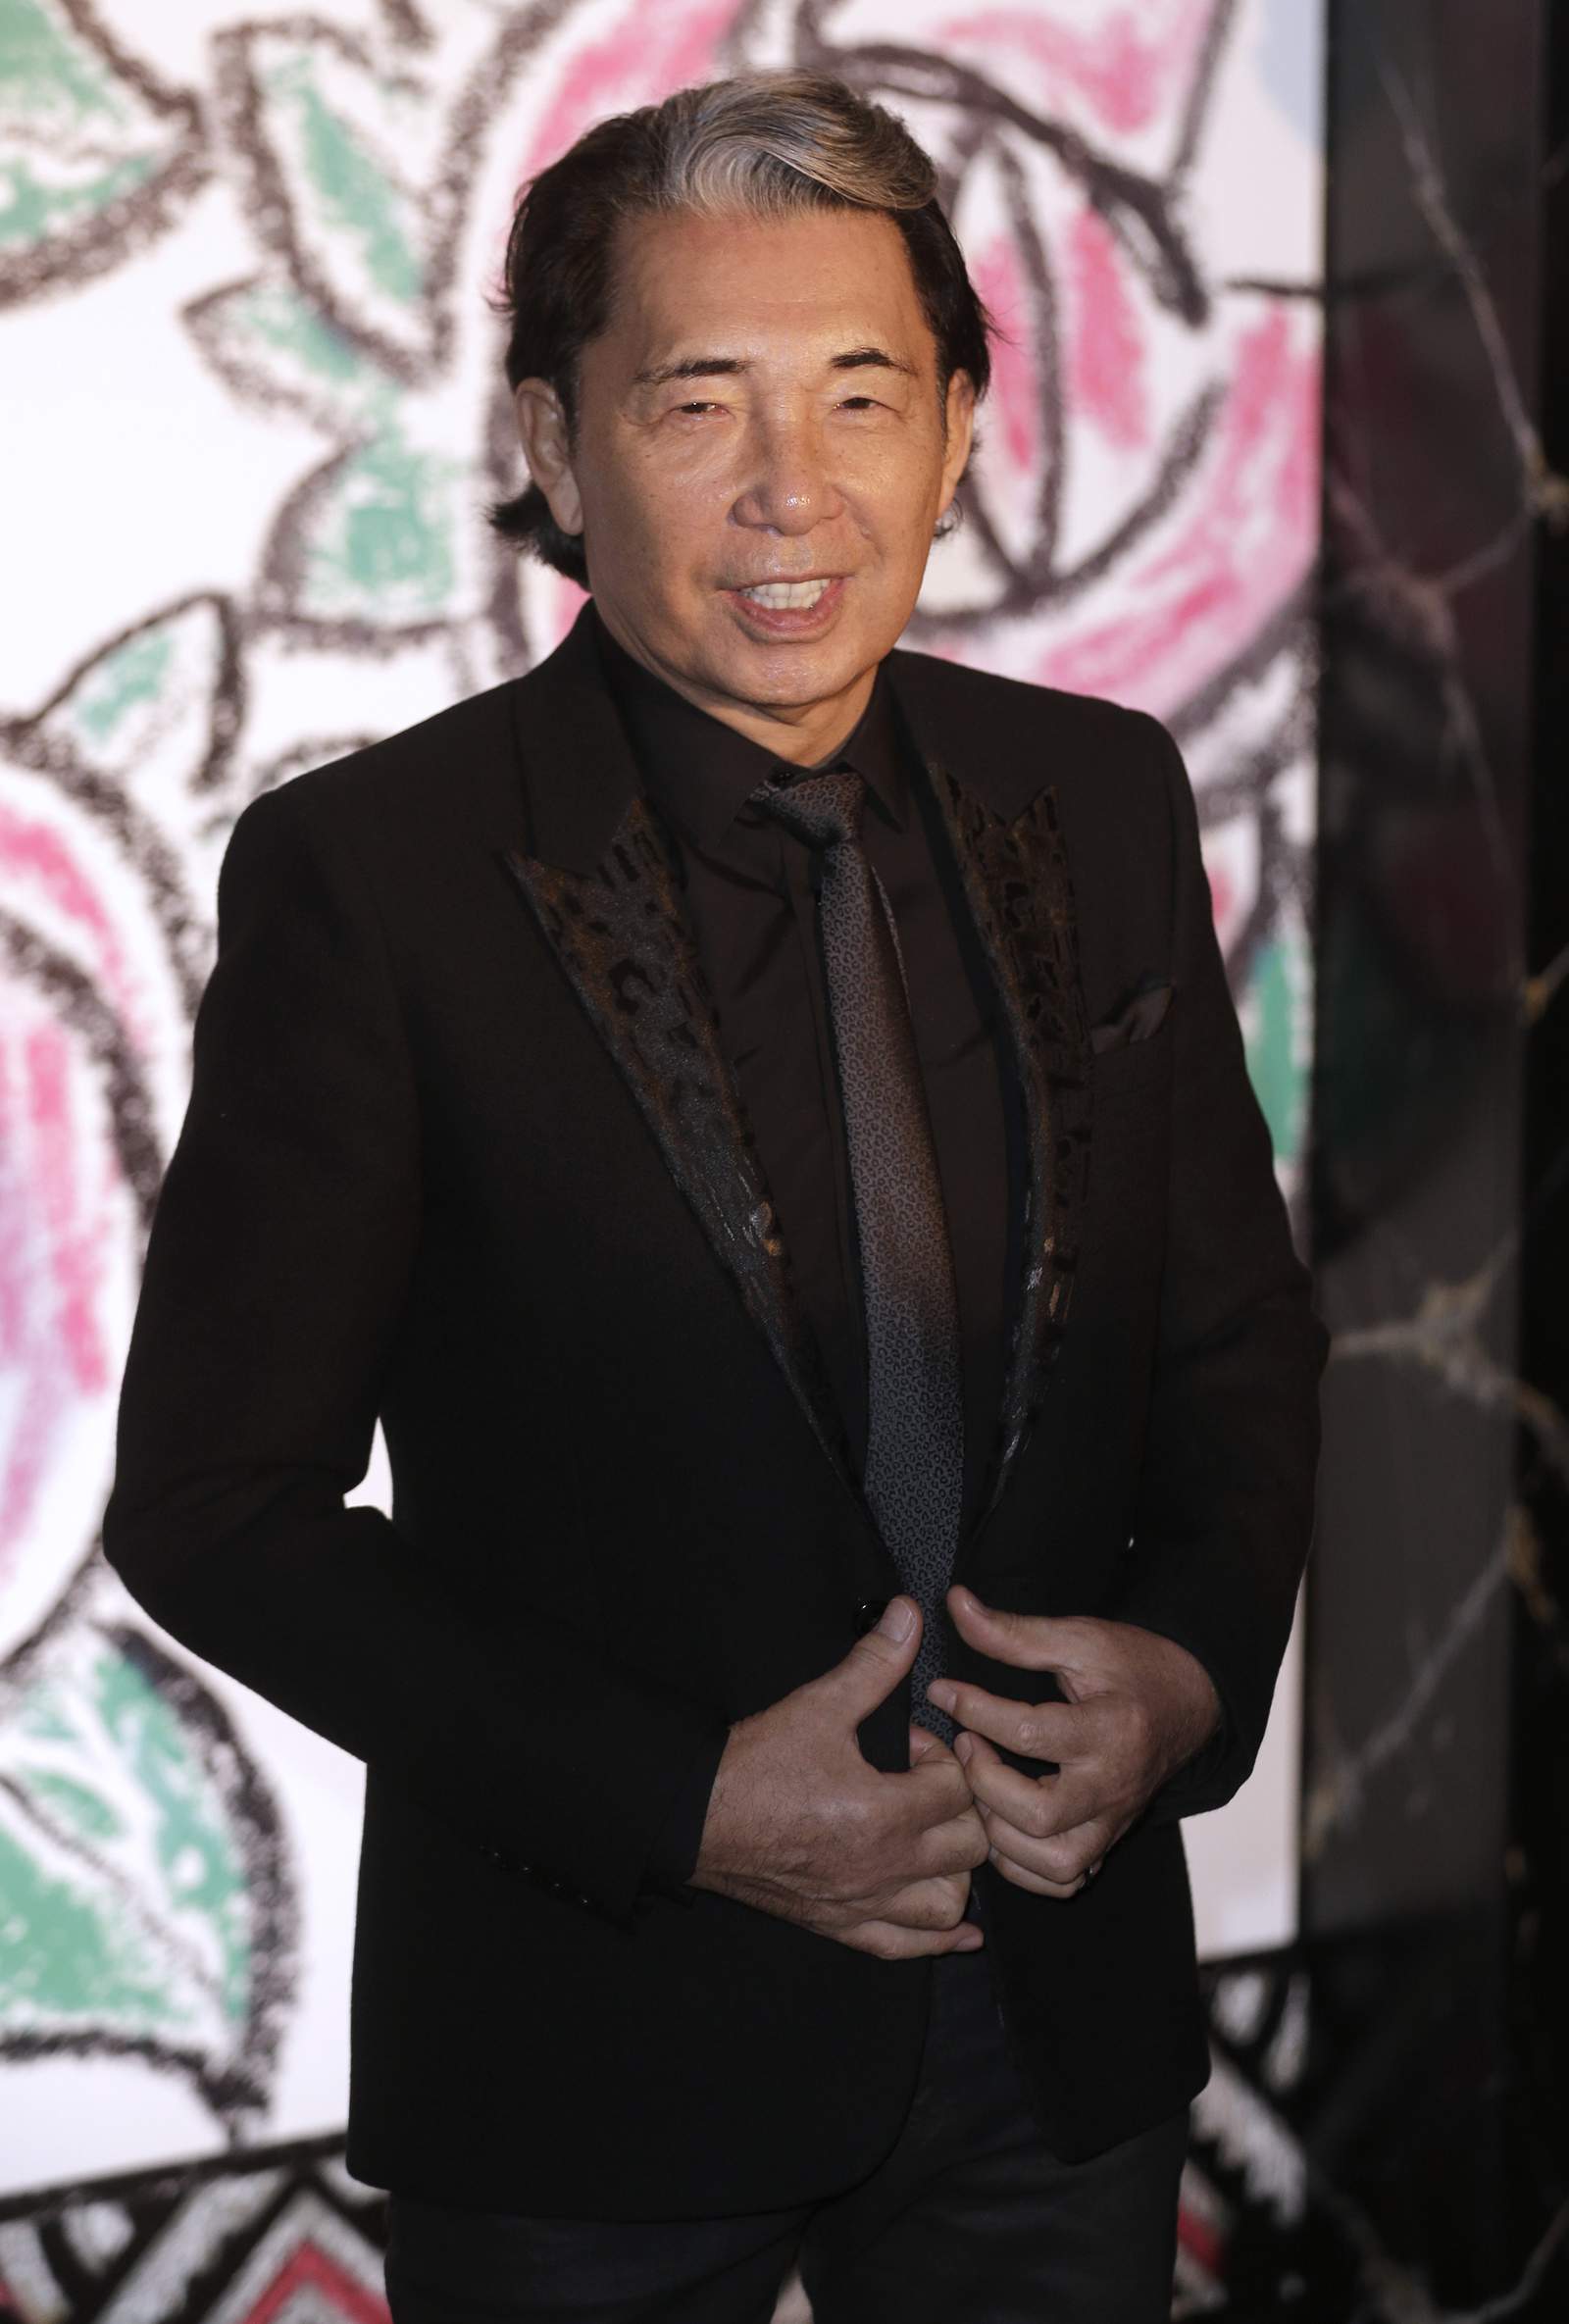 Fashion designer Kenzo Takada dies from COVID-19 at age 81